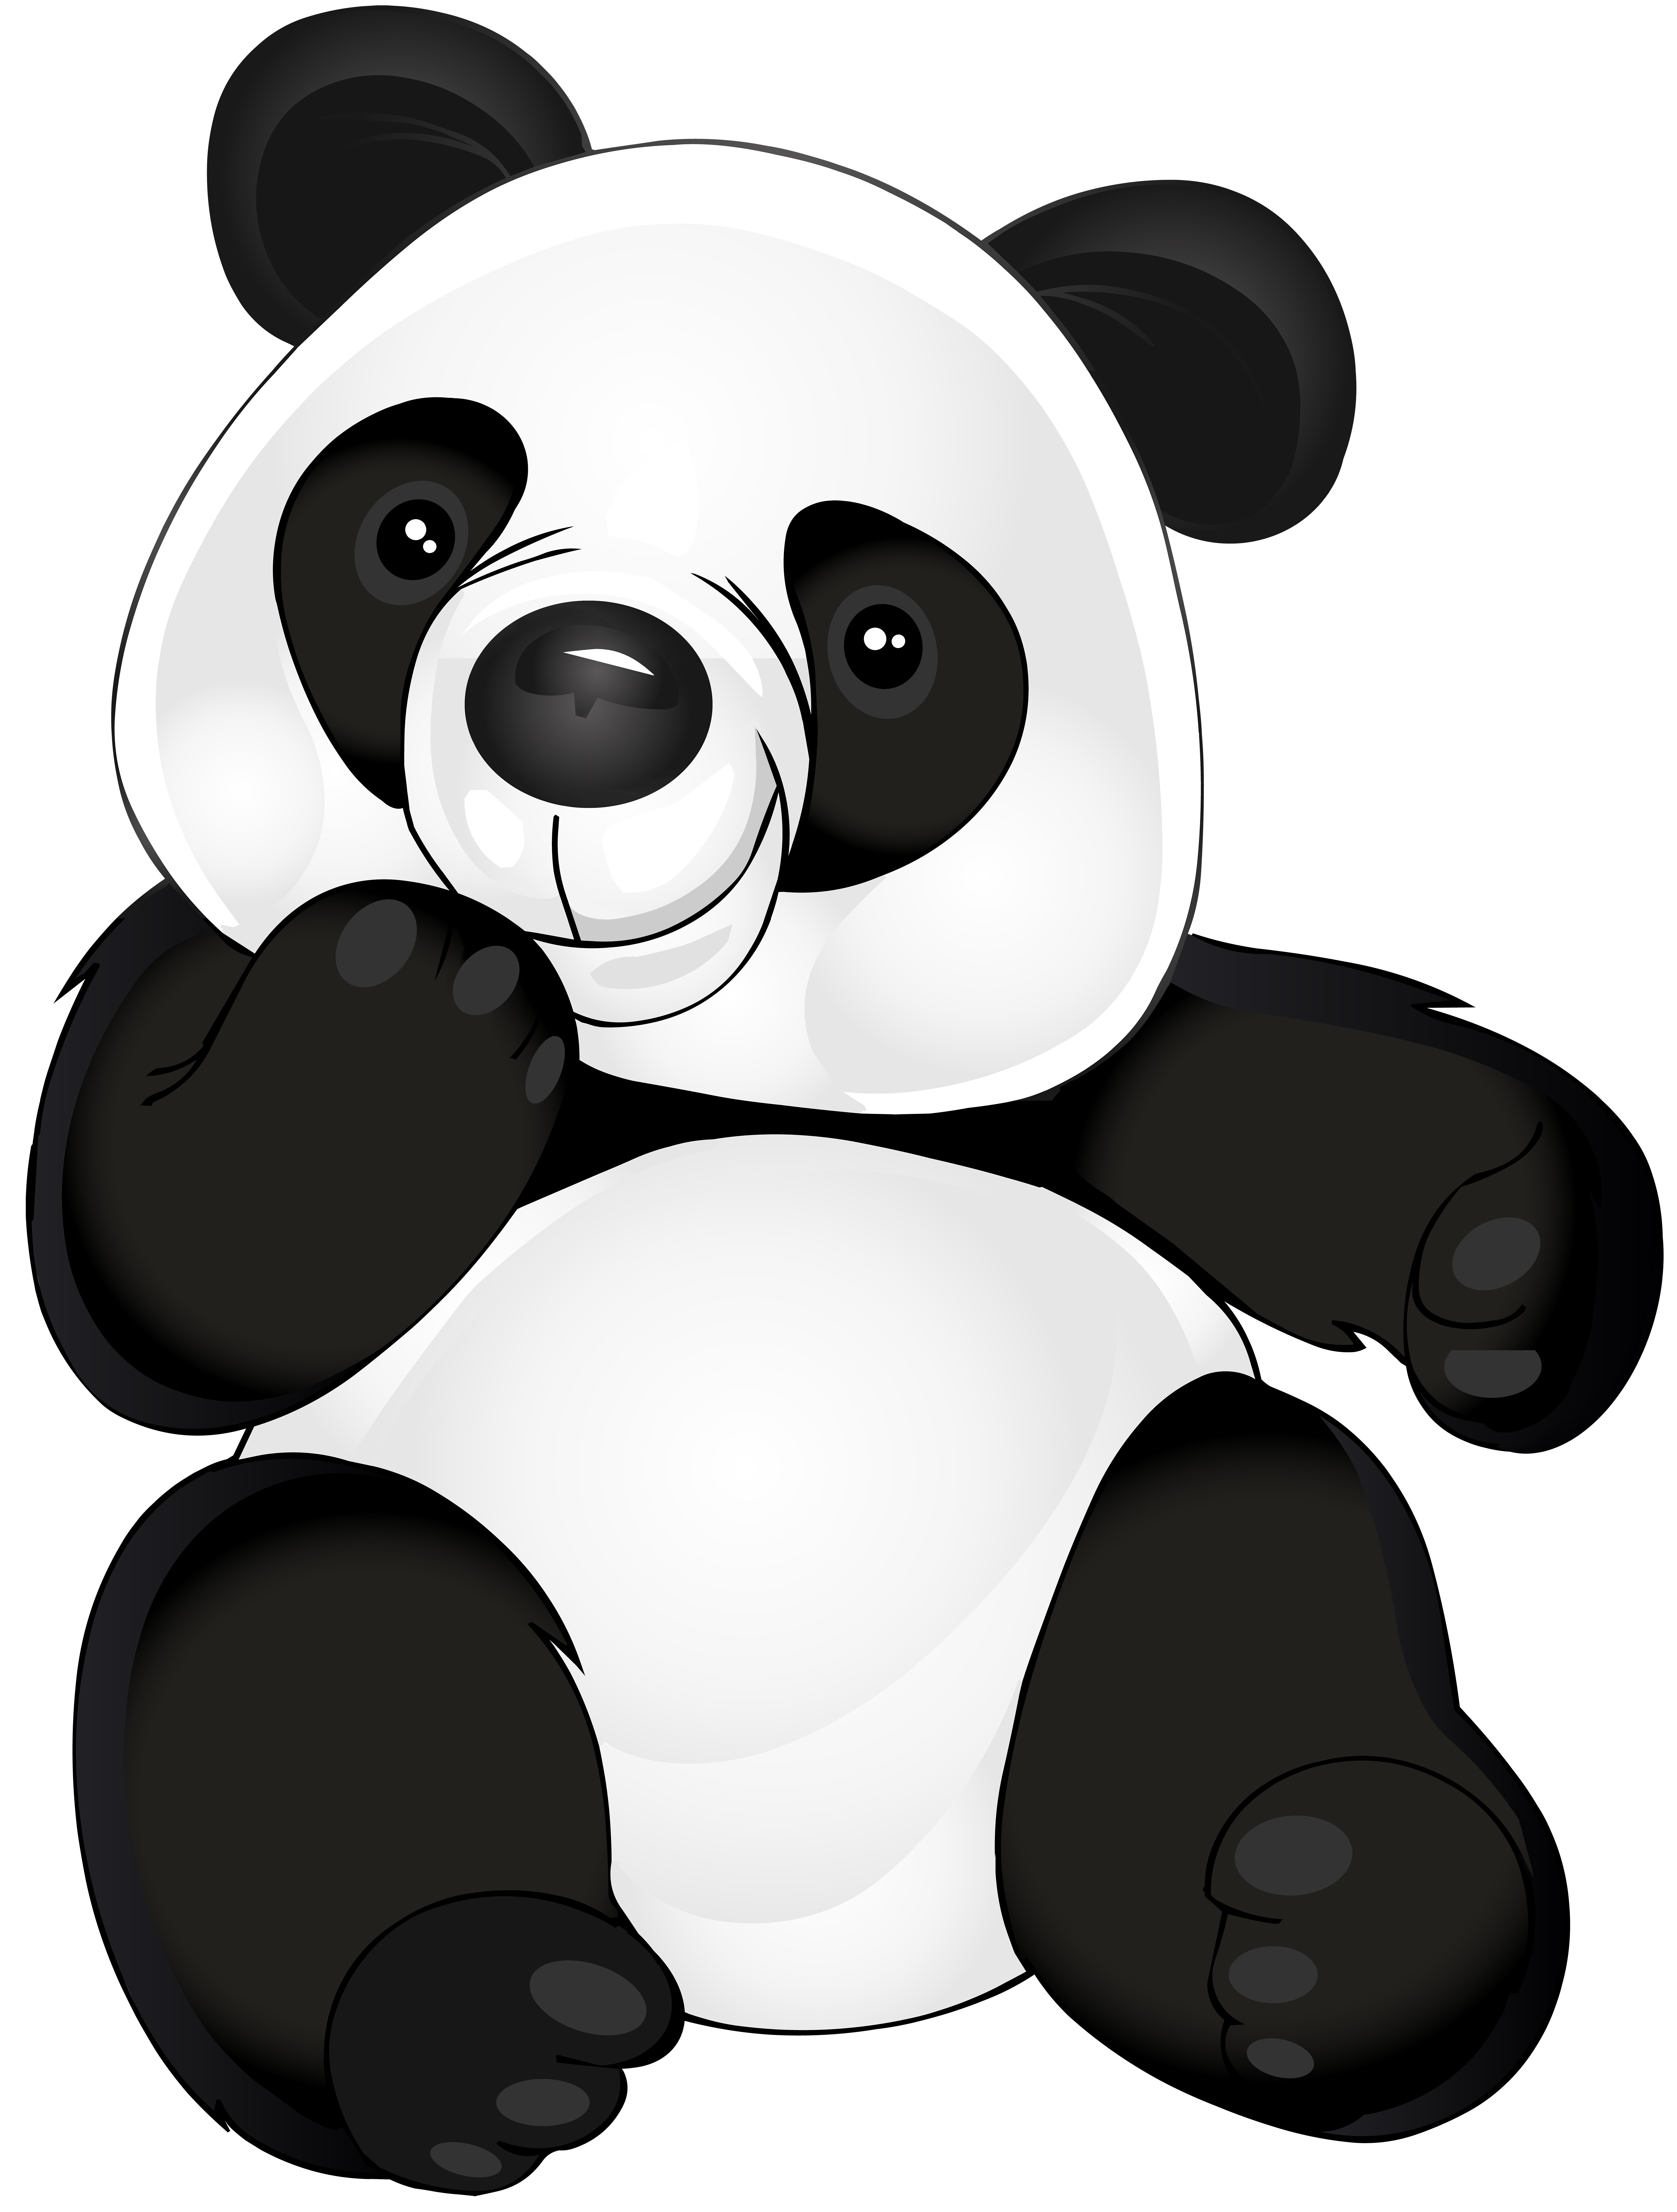 Panda PNG Clip Art Transparent Image | Gallery Yopriceville - High